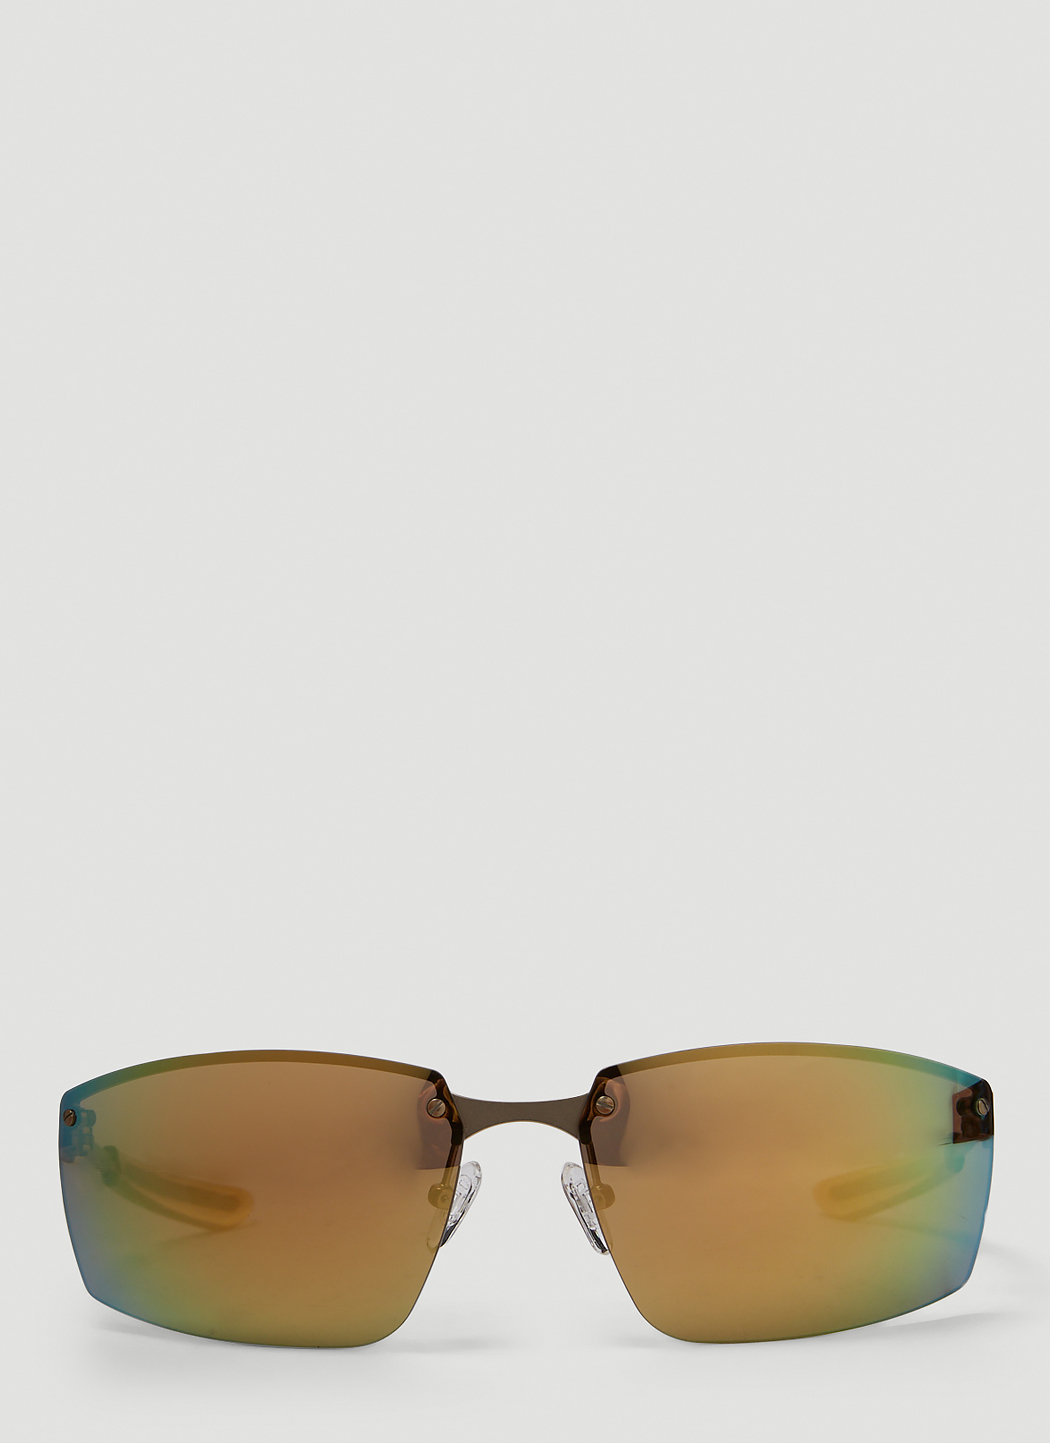 Aero Sunglasses